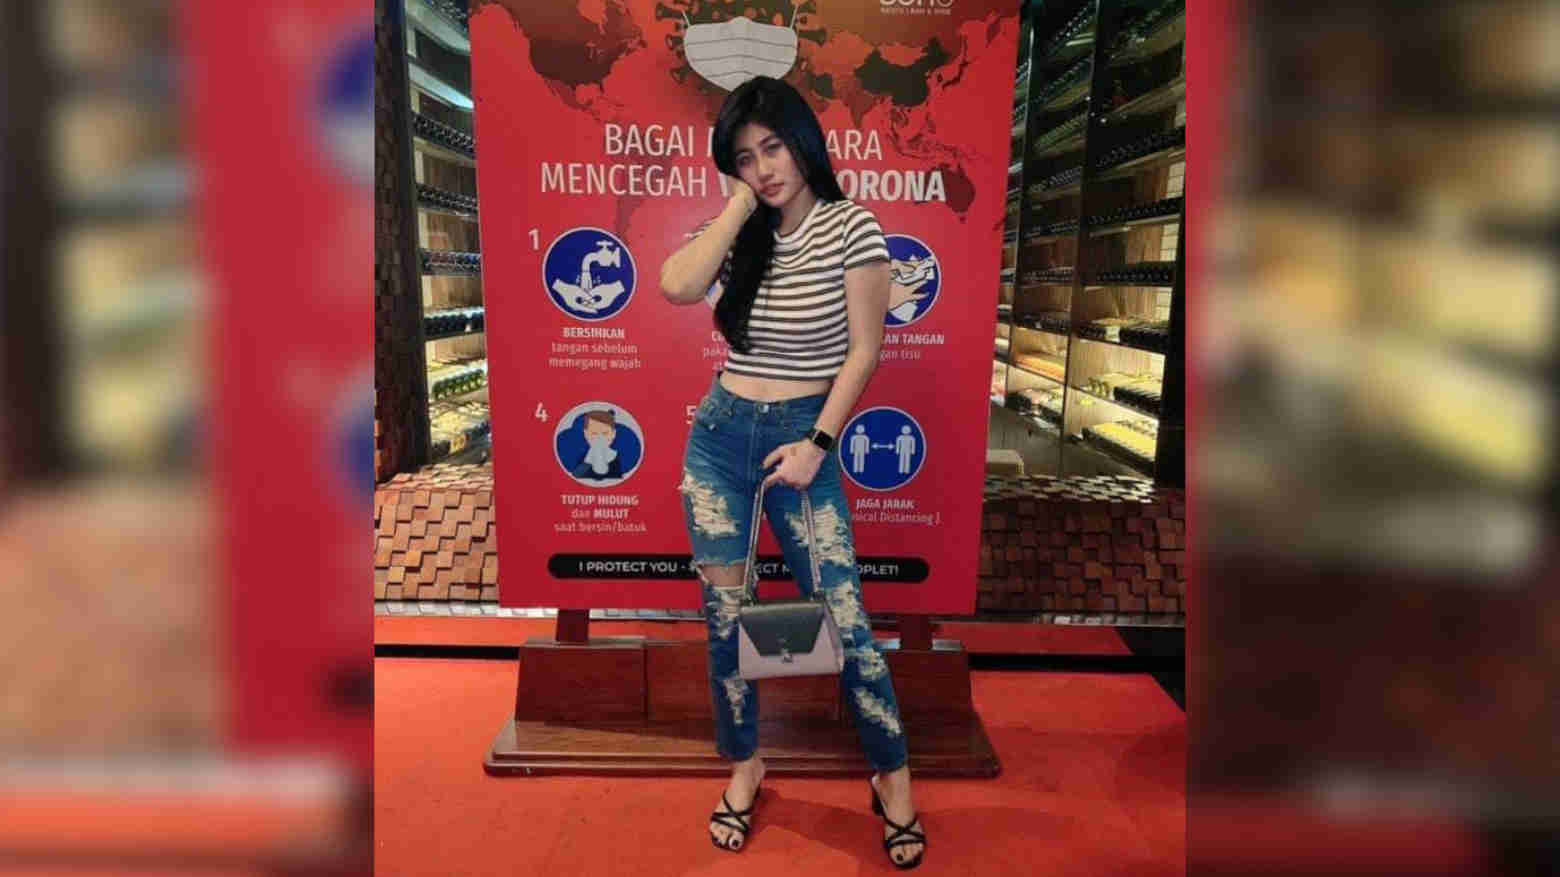 Gegara Arisan Online, Selebgram Cantik Asal Medan Ditangkap Polisi